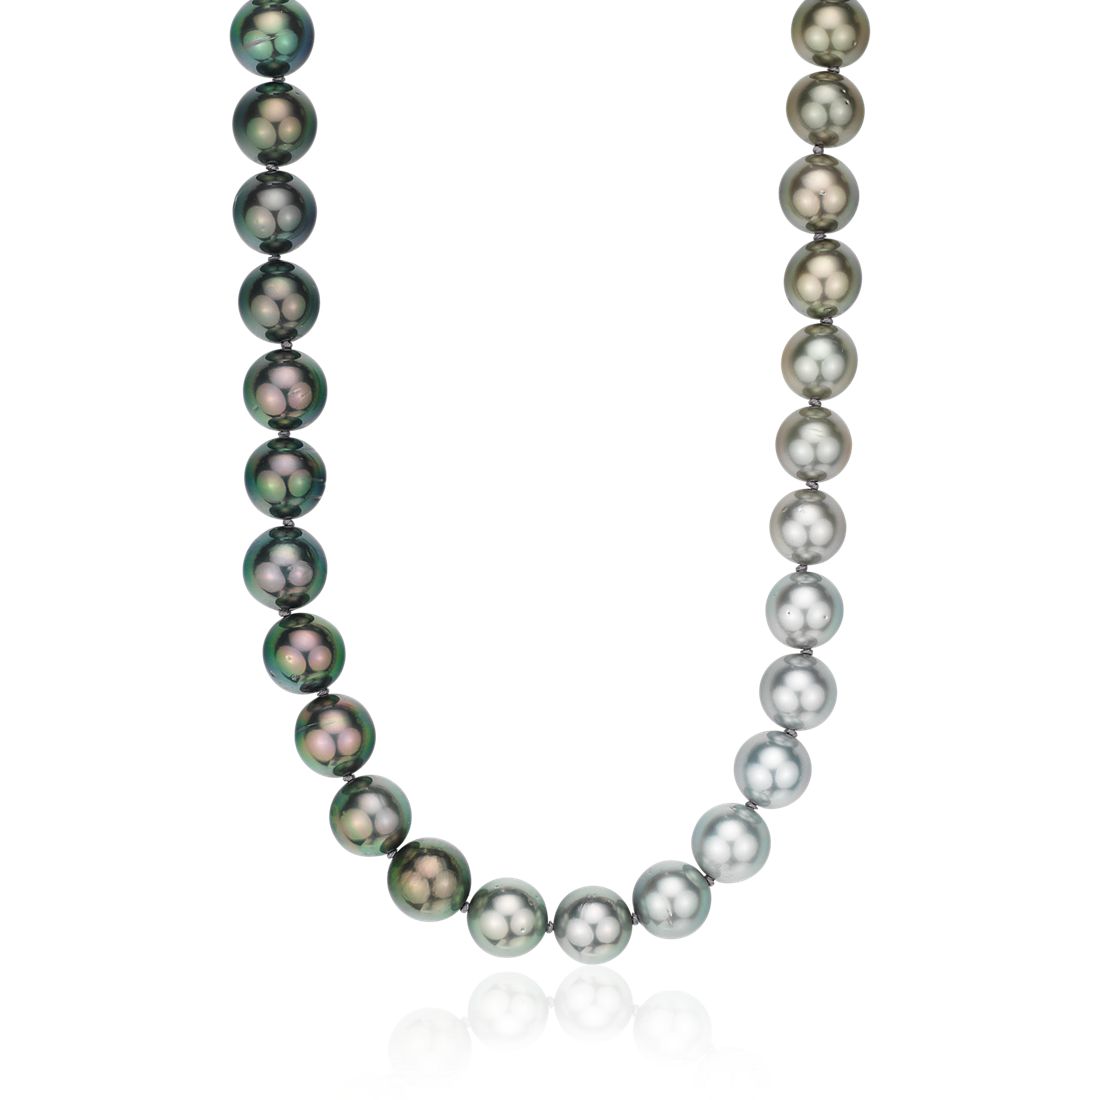 Collier de perles de culture de Tahiti graduées en or blanc 18 carats - 100,33 cm de long (9-10 mm)